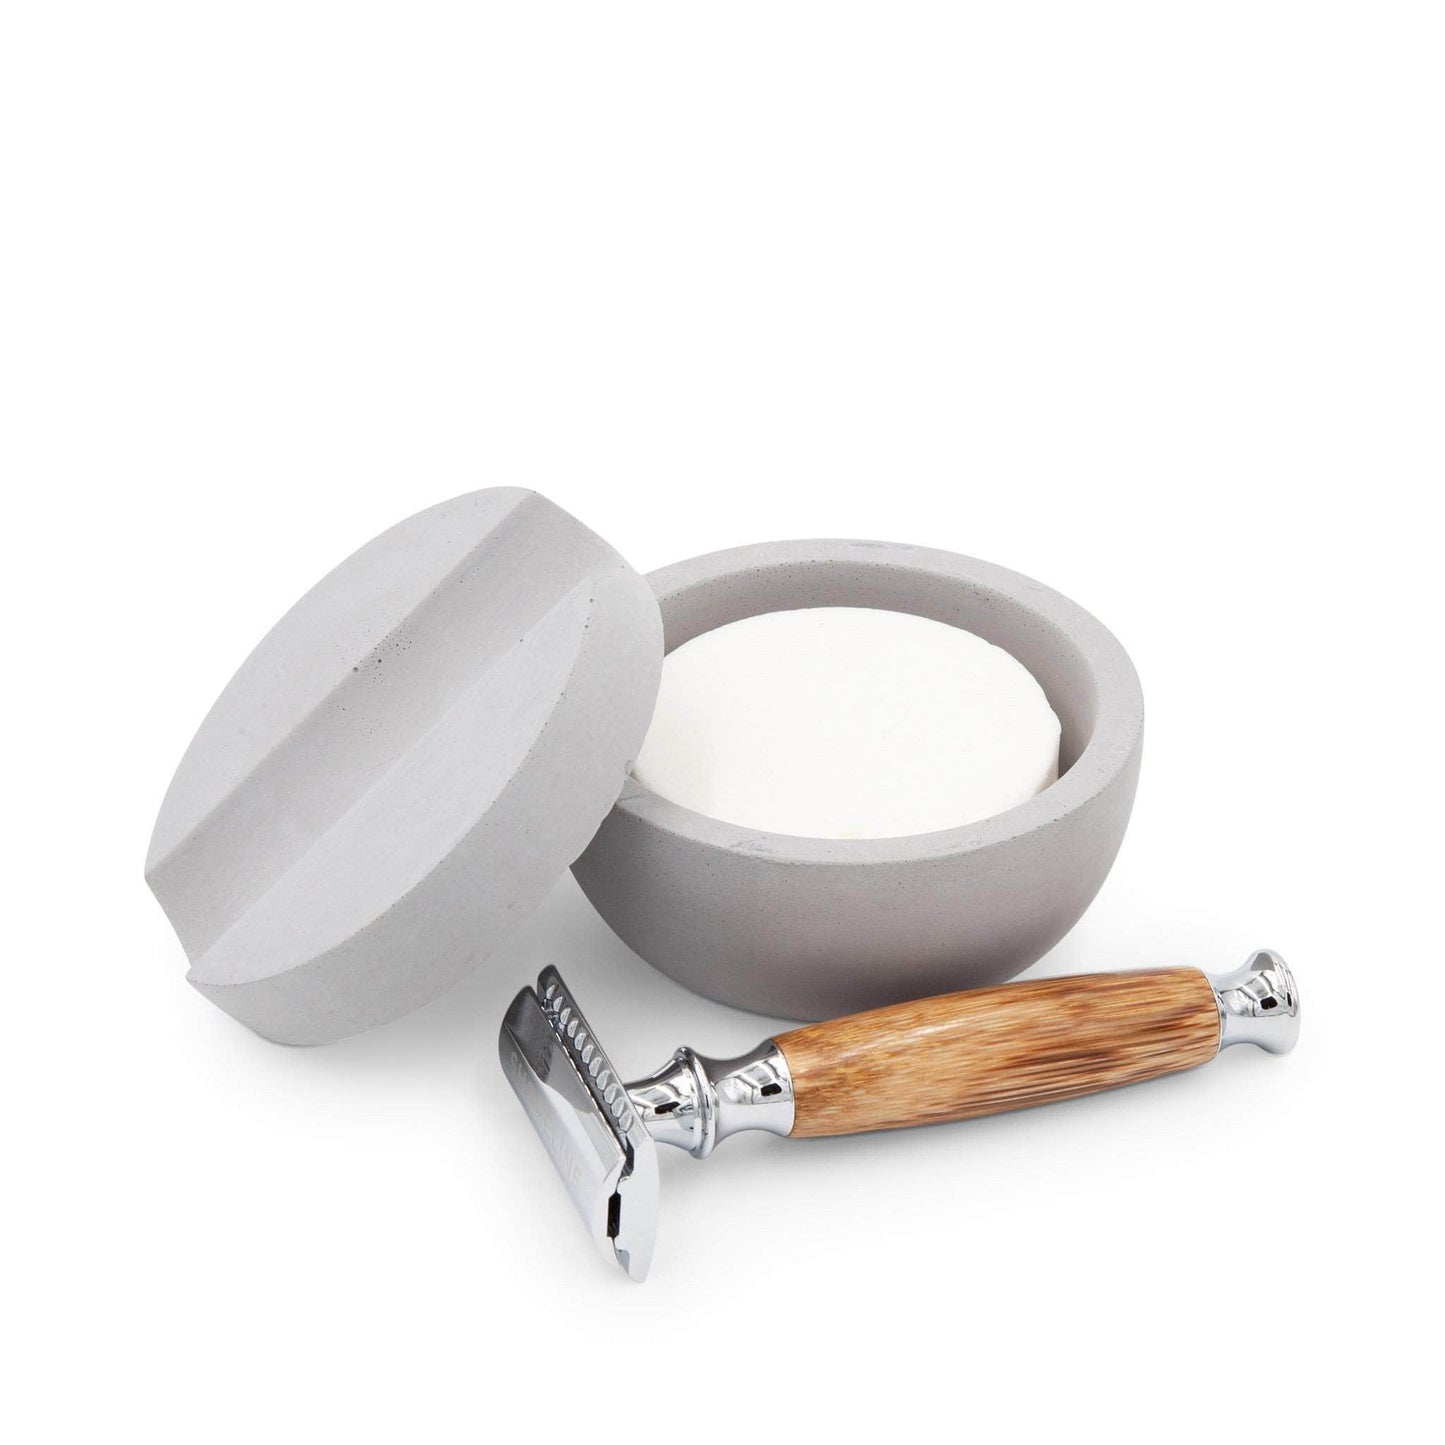 Iris Hantverk Shaving Accessories Iris Hantverk Shaving Cup In Grey Soft Concrete With Cedarwood Soap